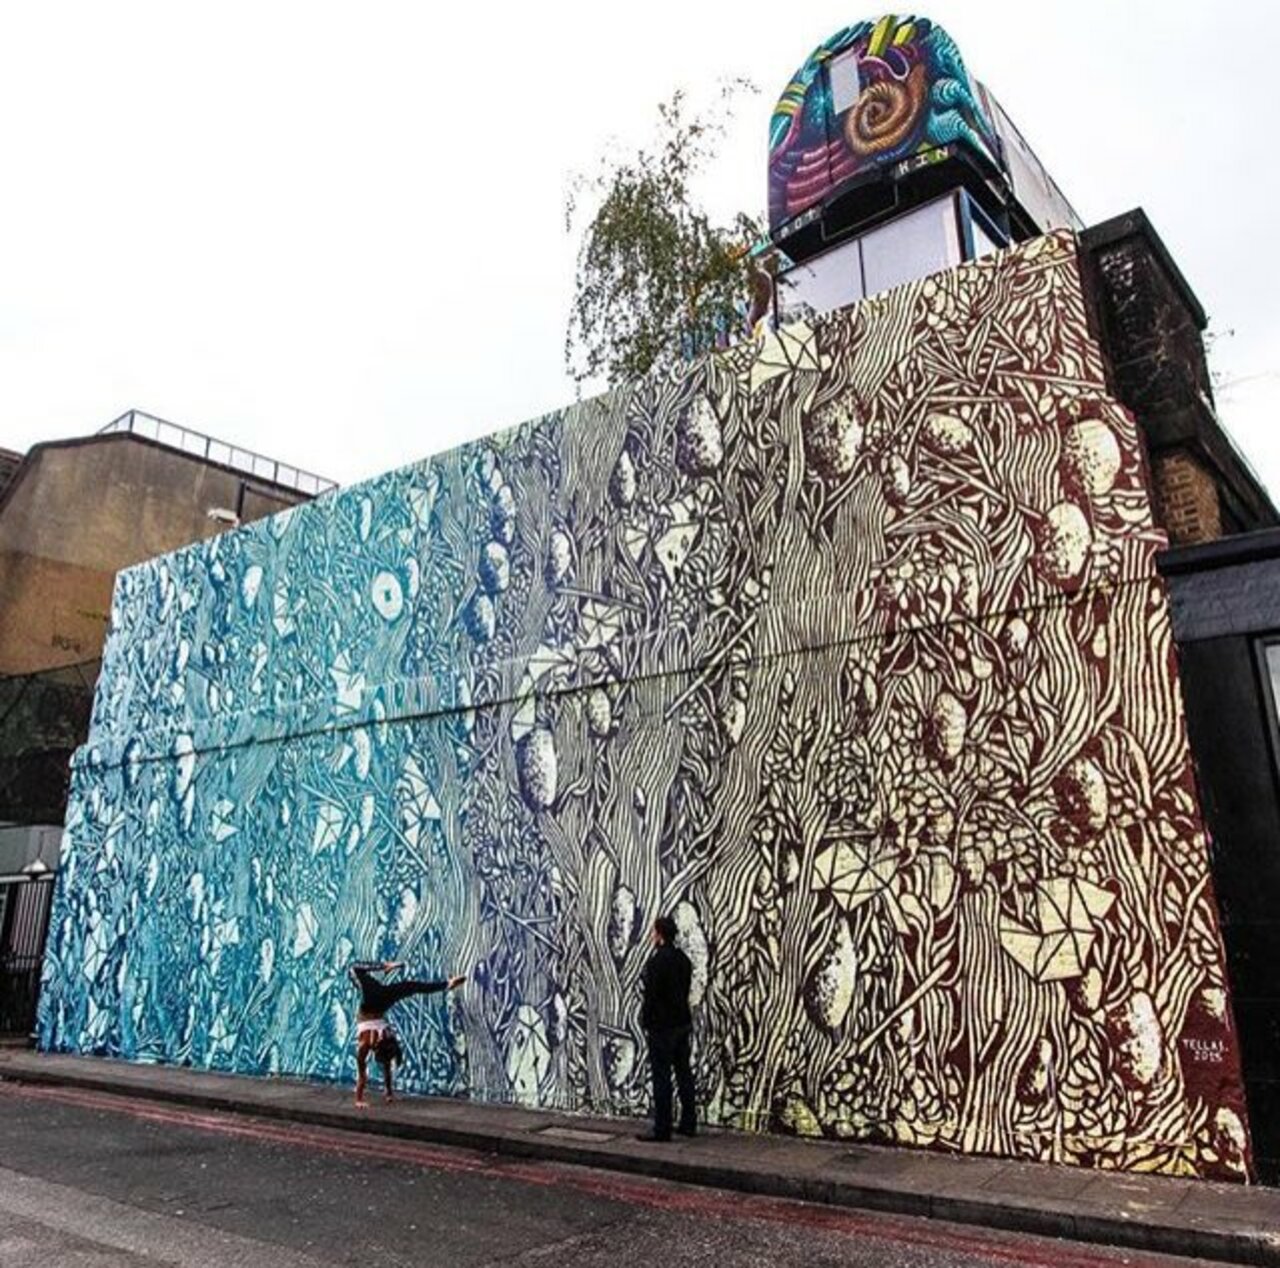 RT @GoogleStreetArt: New Street Art by Tellas in Shoreditch London 

#art #graffiti #mural #streetart https://t.co/bkknlK89vh